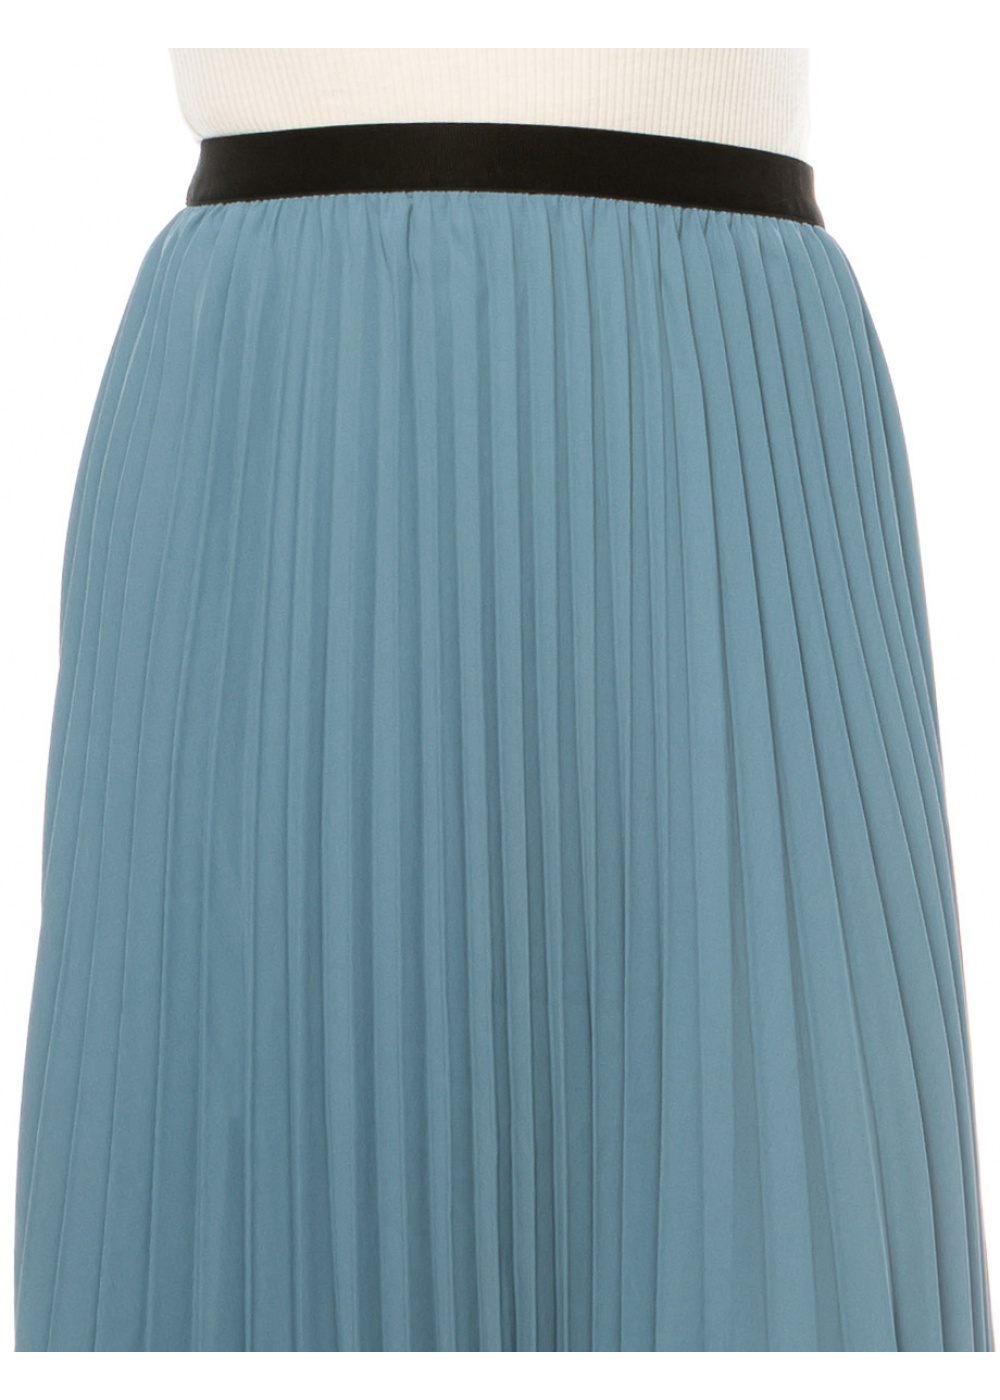 Classic Pleated Blue Skirt